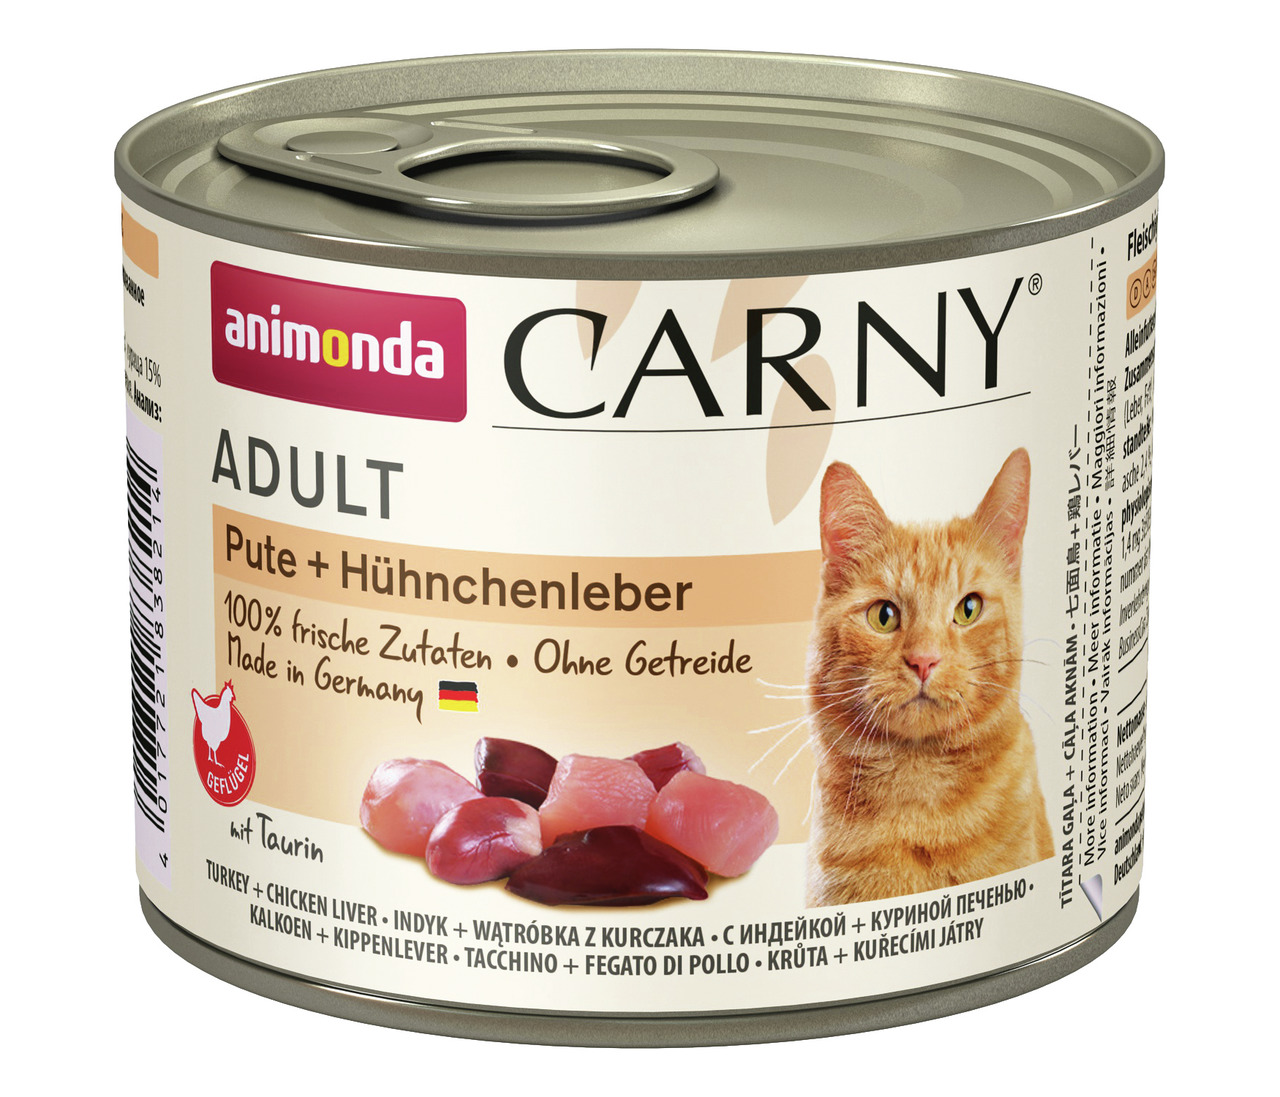 Animonda Carny Adult Pute + Hühnchenleber Katzen Nassfutter 200 g